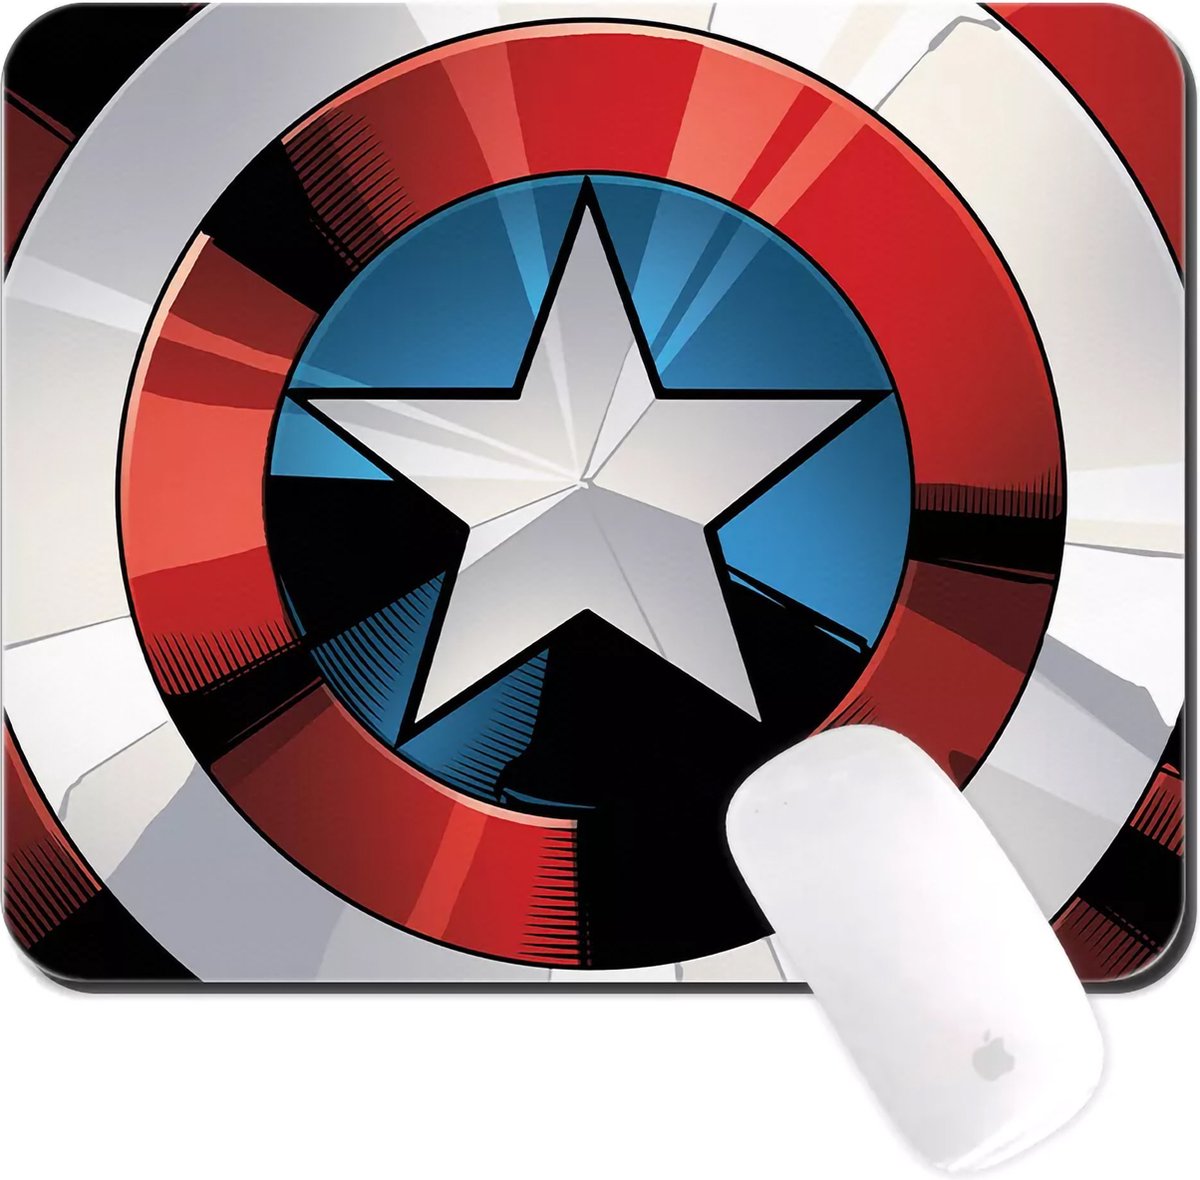 Marvel Captain America - Muismat 22x18cm 3mm dik